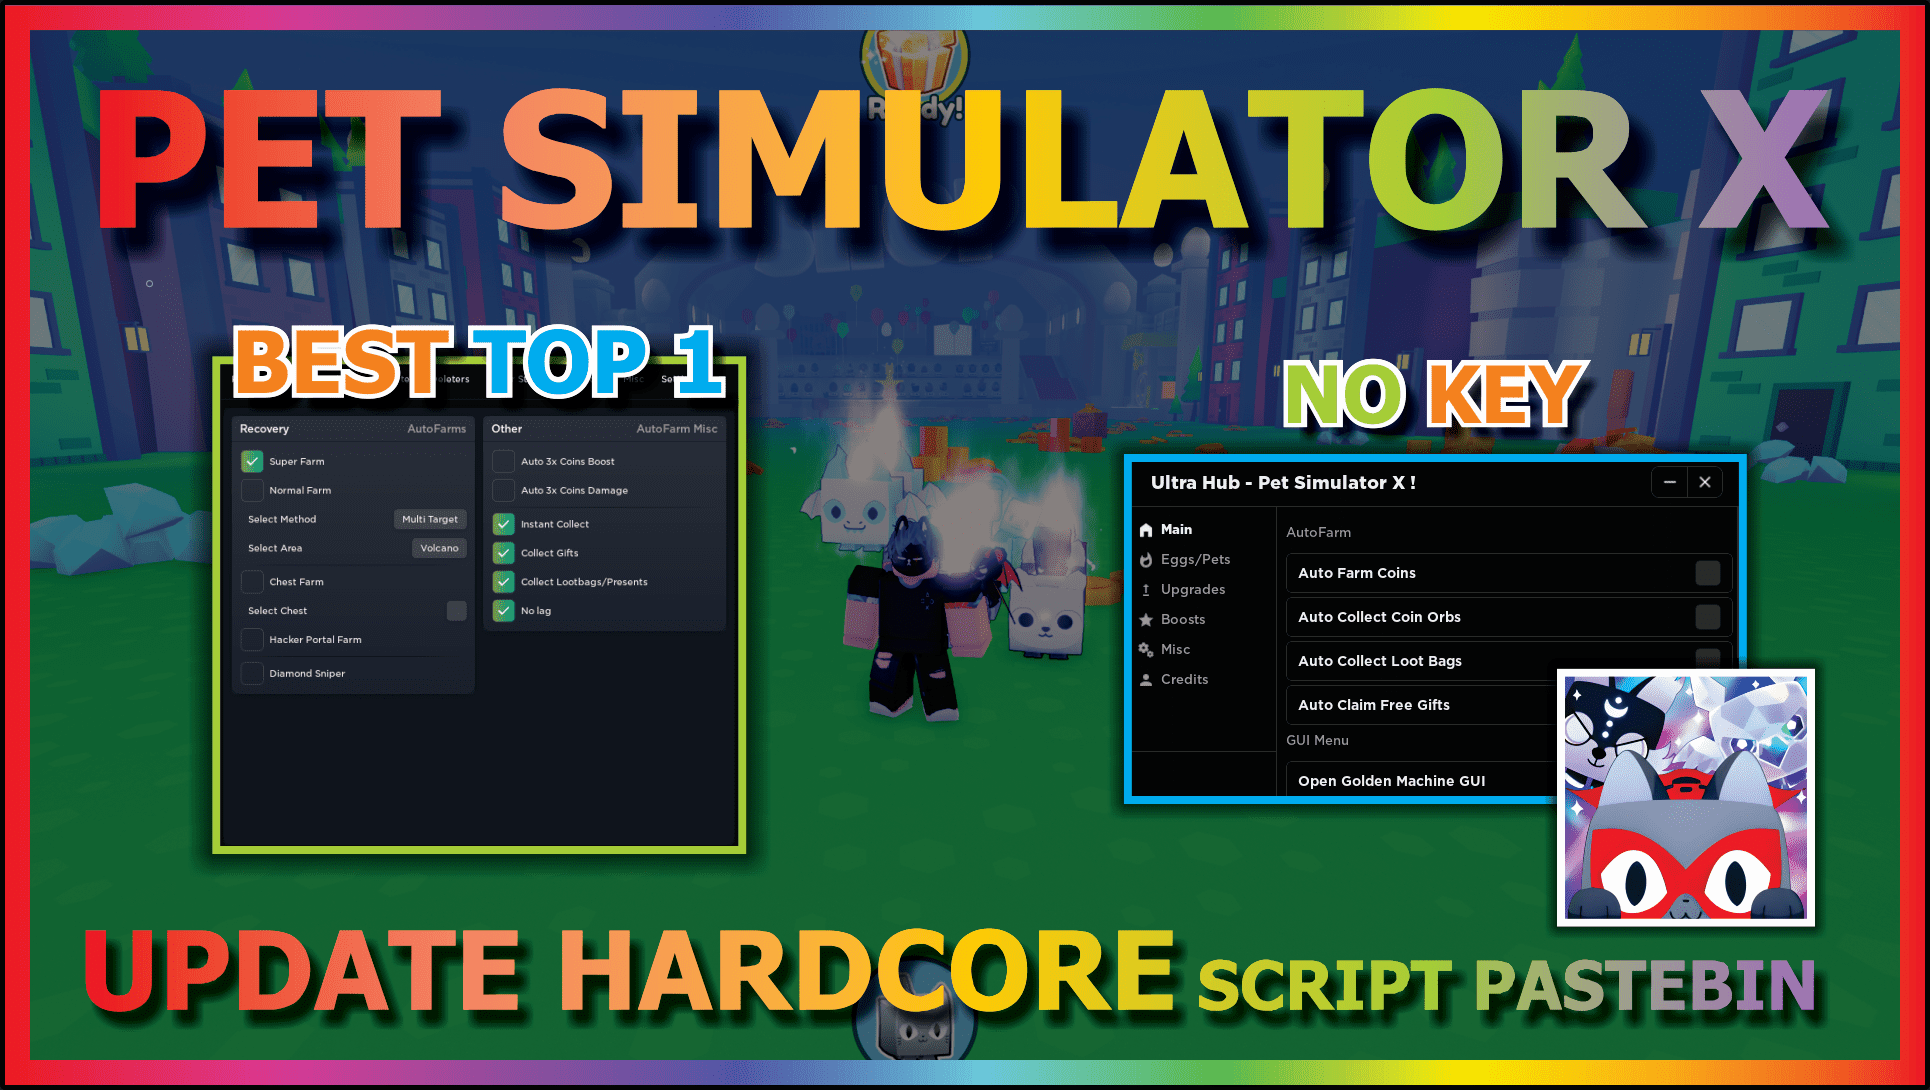 CapCut_new script pet simulator x